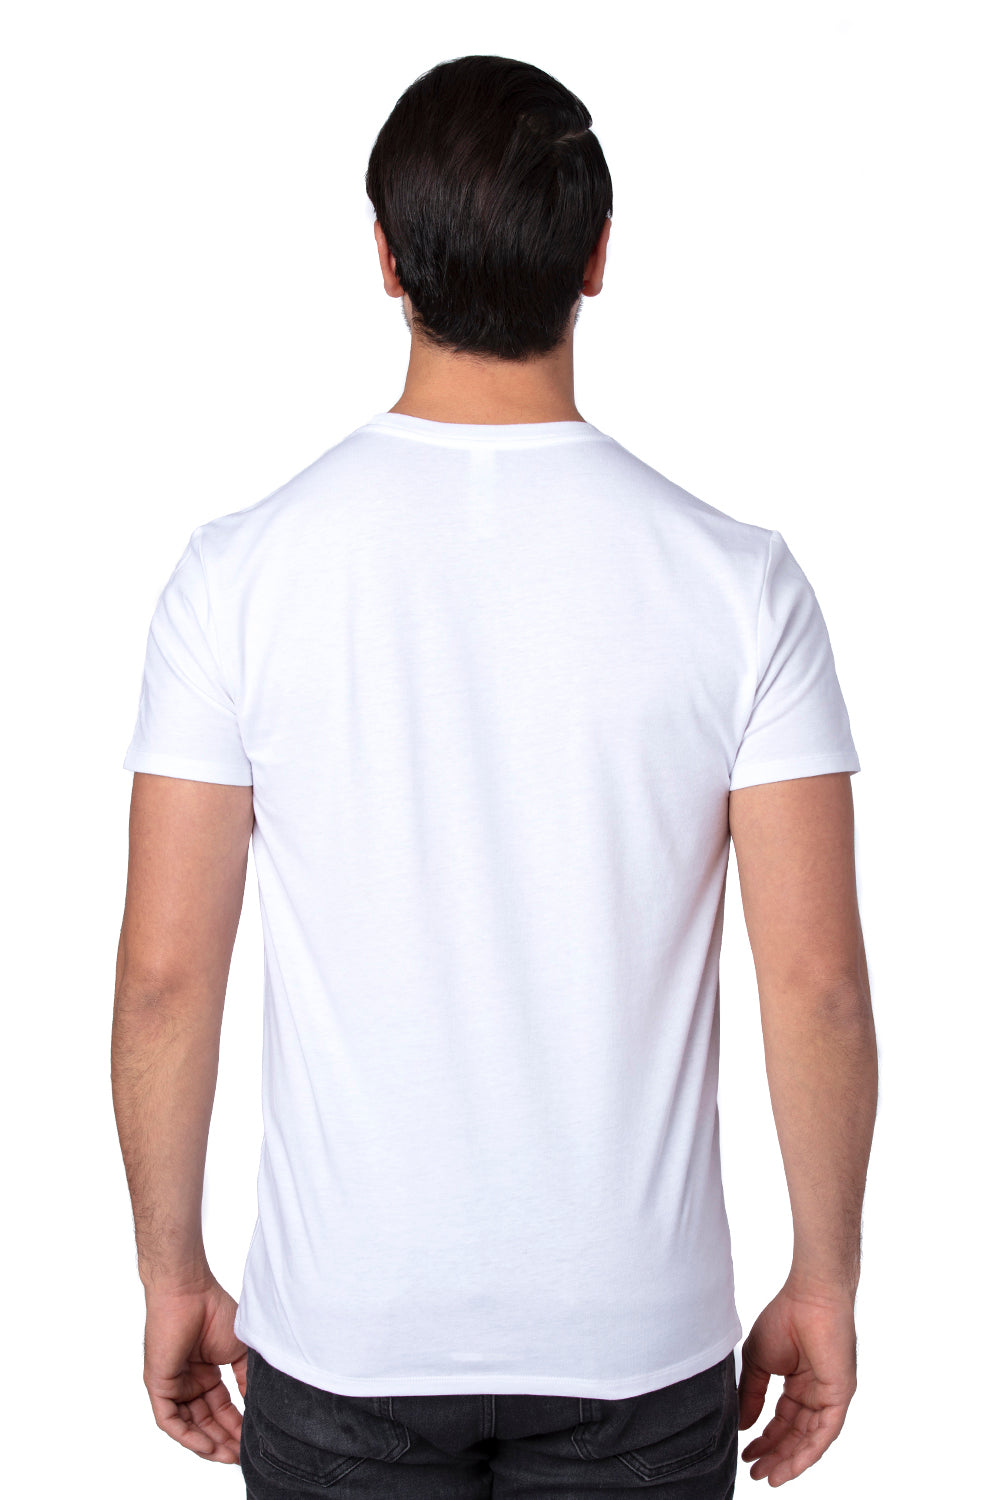 Threadfast Apparel 100A Mens Ultimate Short Sleeve Crewneck T-Shirt White Back